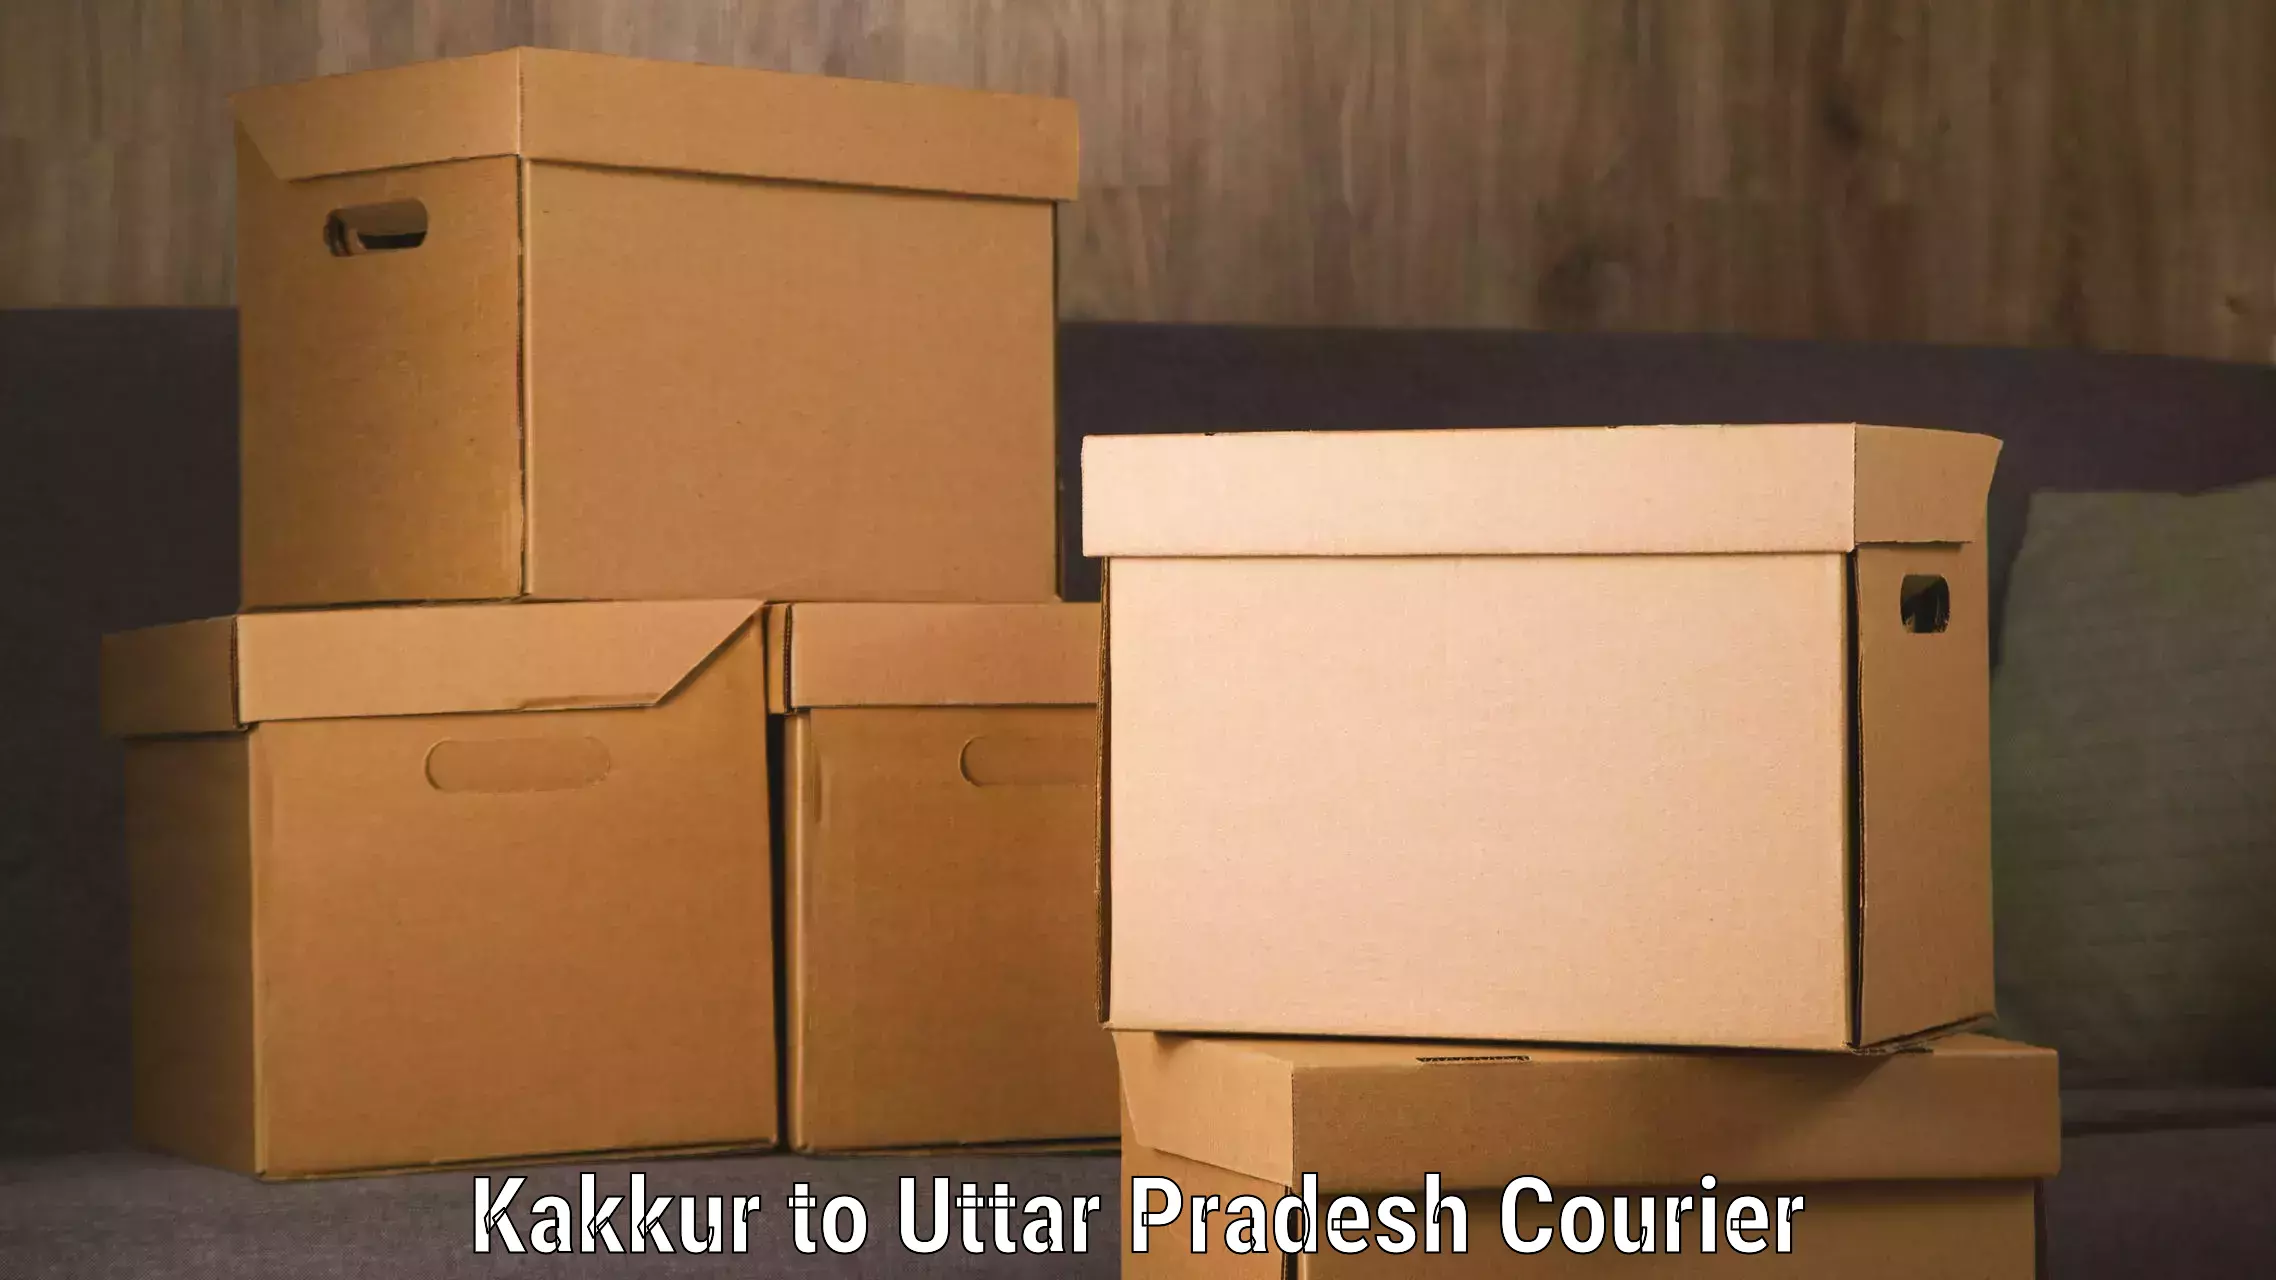 Full-service courier options Kakkur to Agra